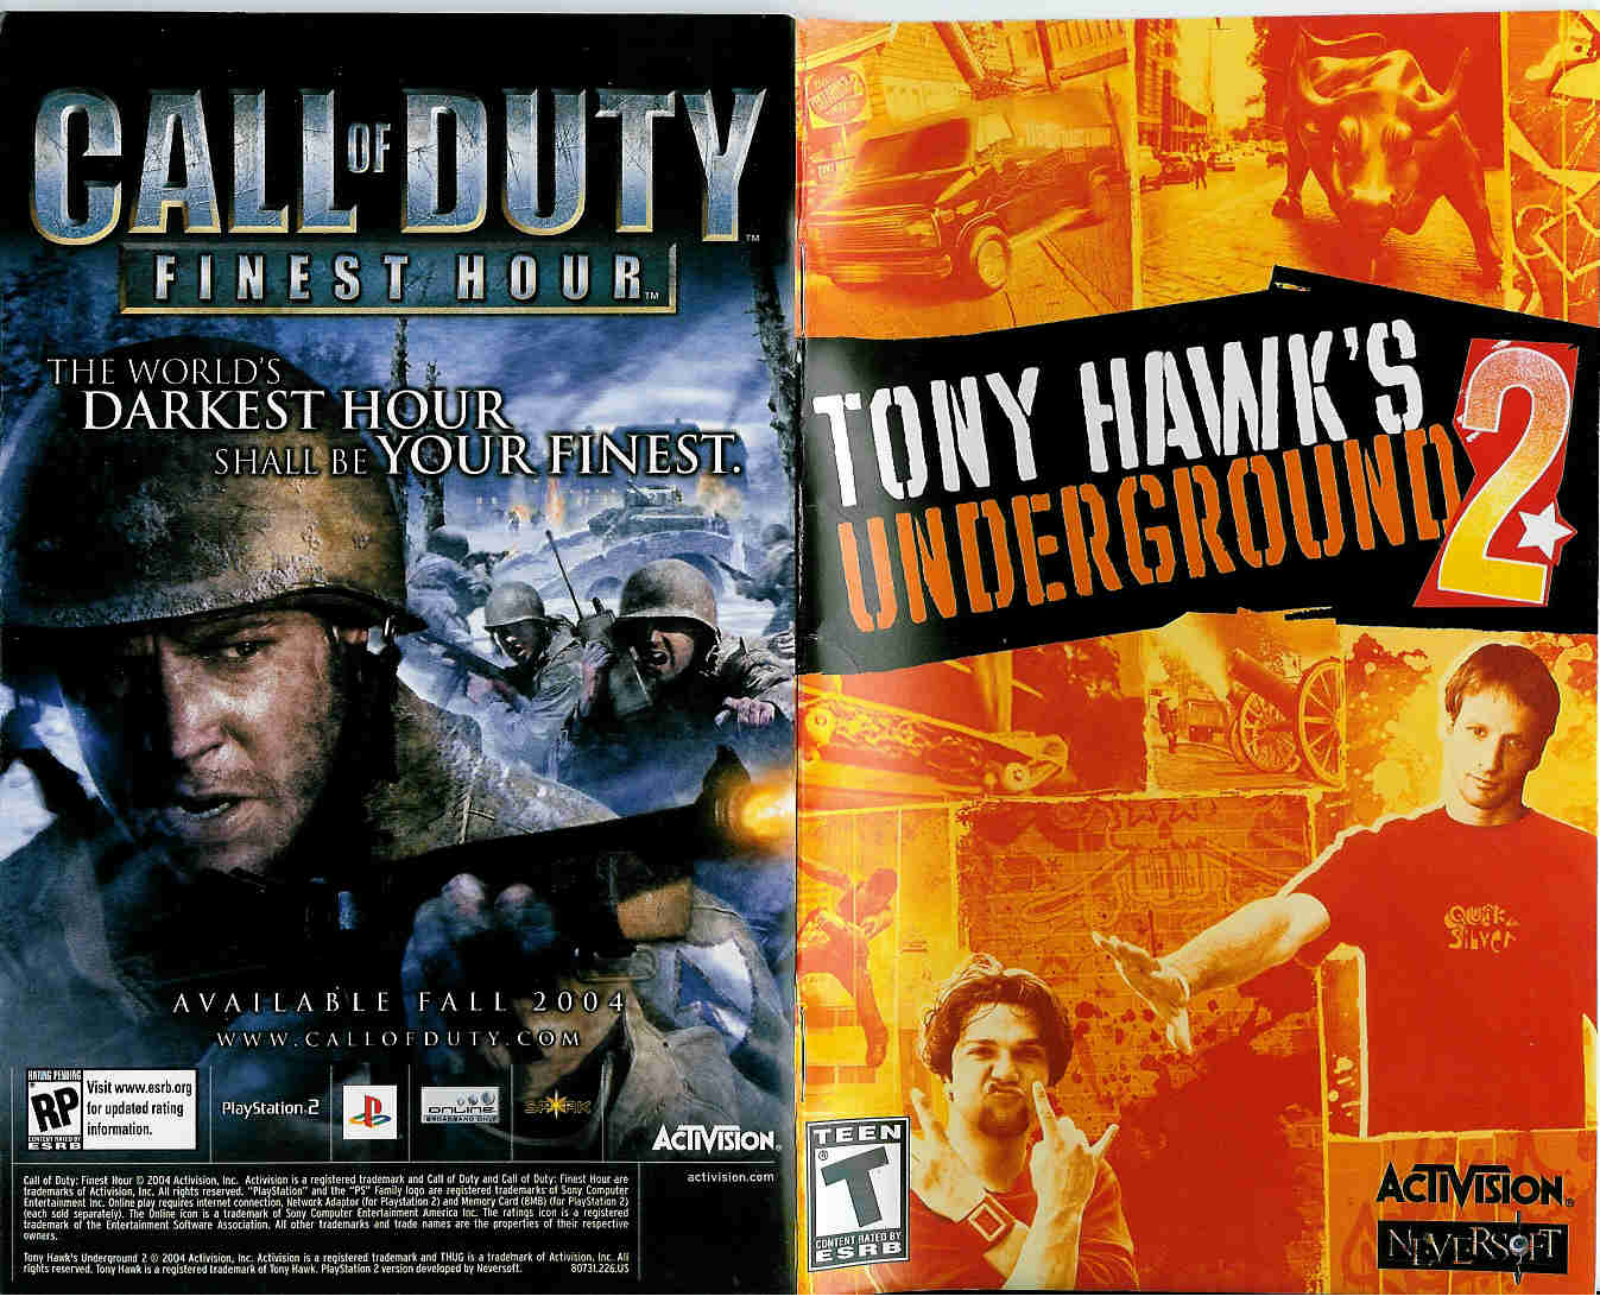 Games PS2 TONY HAWK-UNDERGROUND 2 User Manual